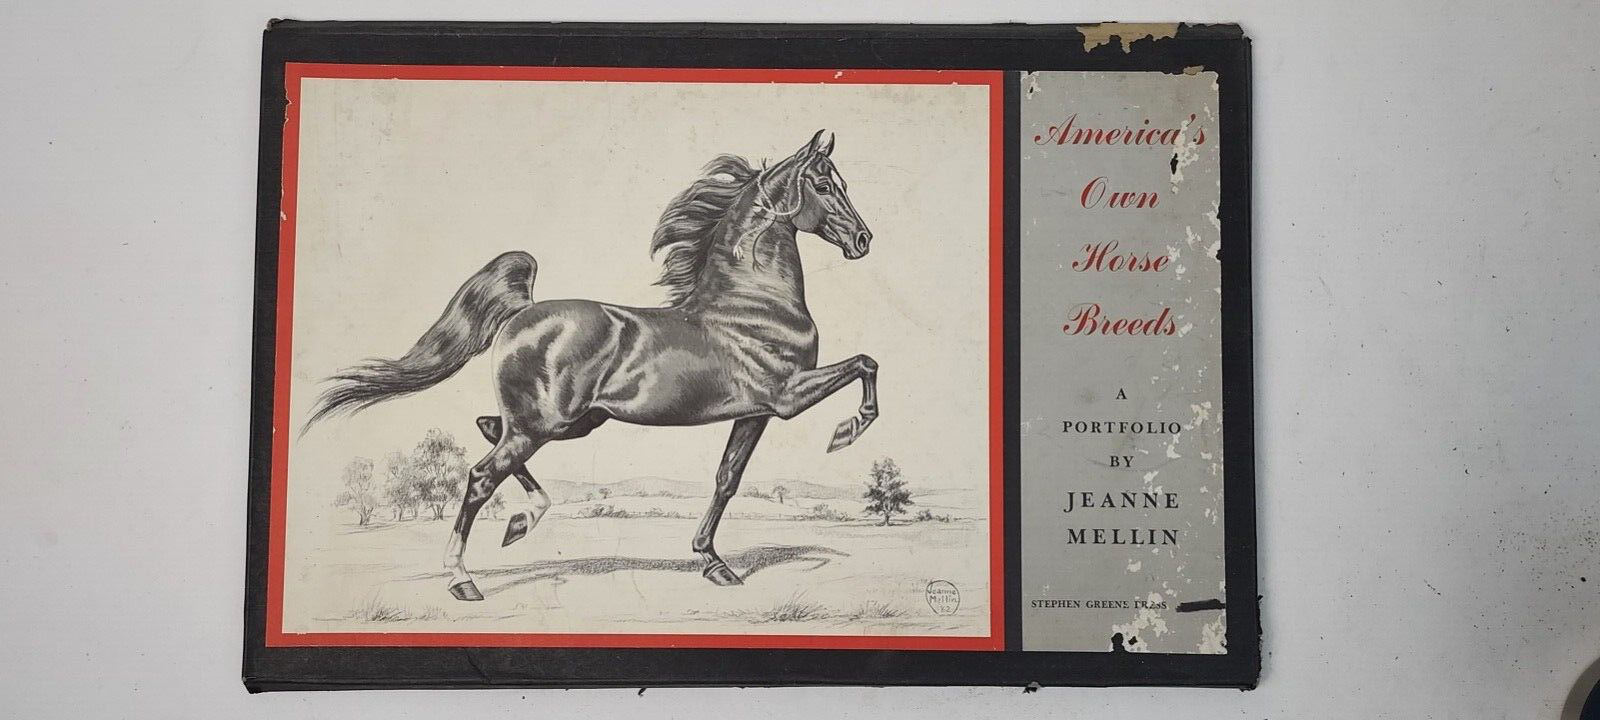 VINTAGE AMERICA'S OWN HORSE BREEDS ~ A PORTFOLIO BY JEANNE MELLIN ~ 1962